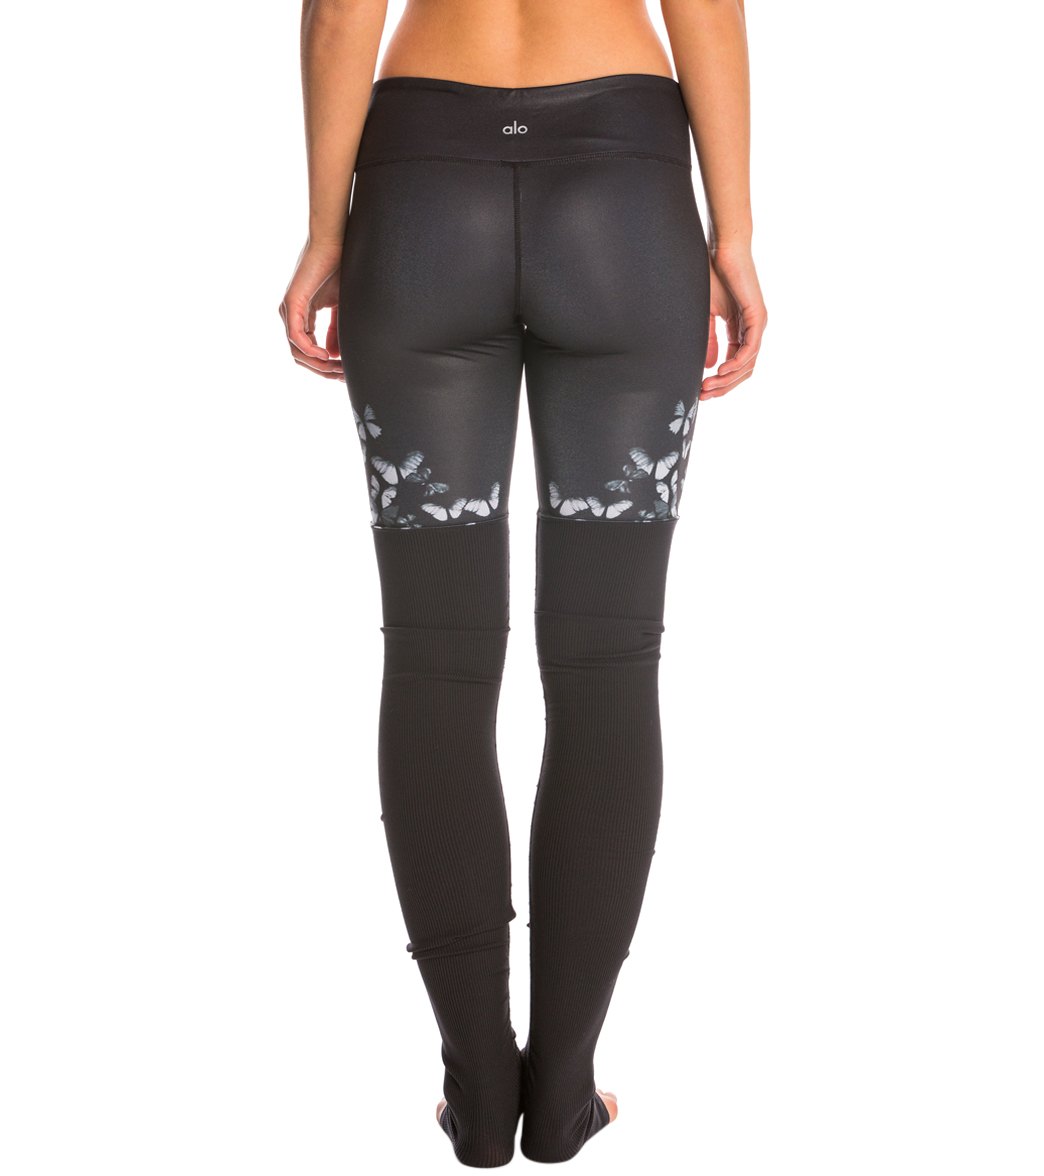 Alo Yoga Goddess Leggings in Black and Gray Size XS